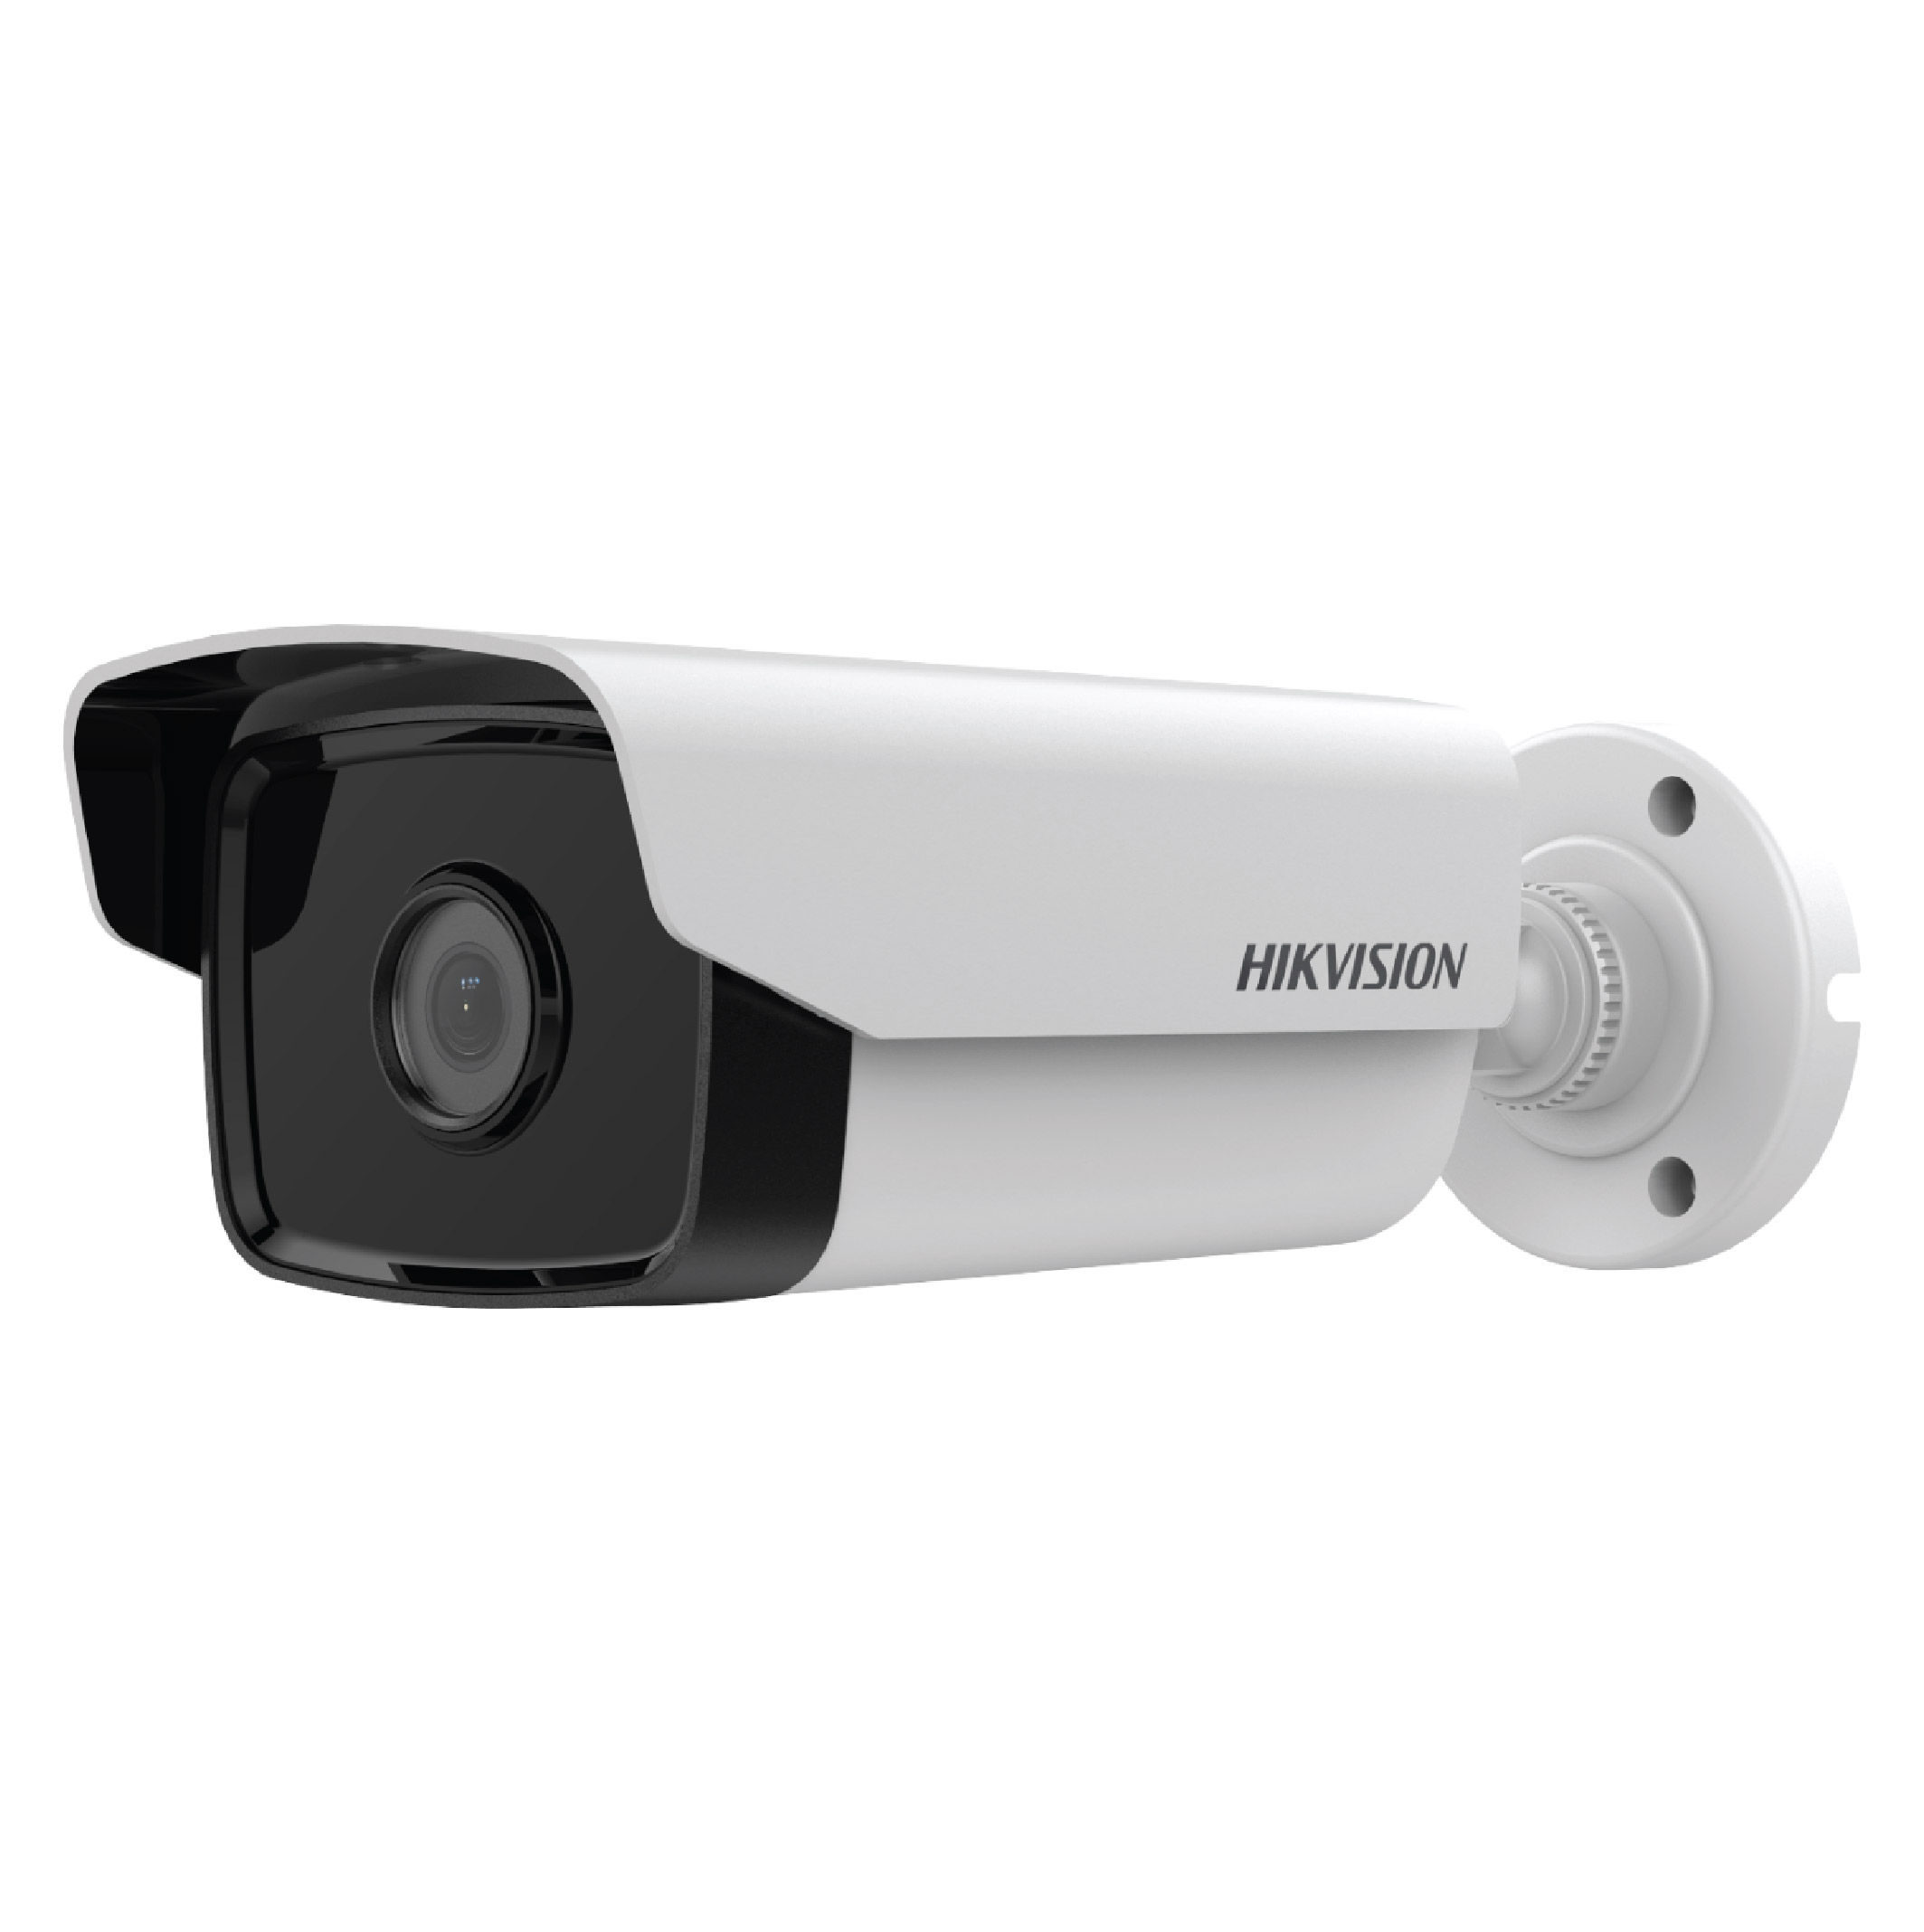 HIKVISION DS-2CD1T23G0-I Turbo HD Camera